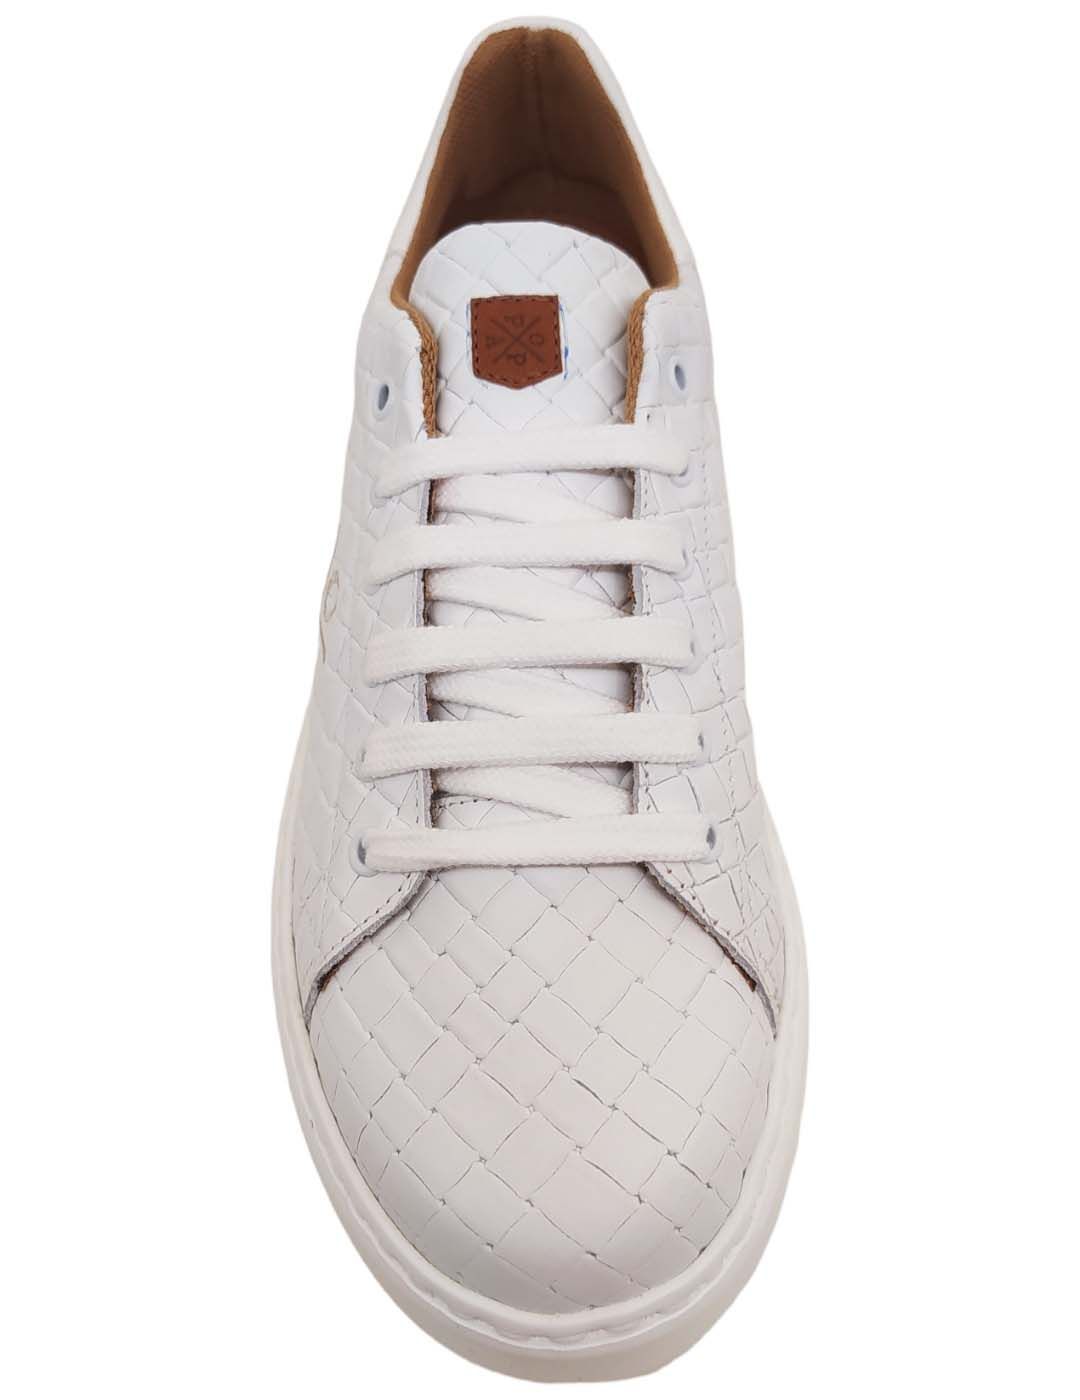 Zapatilla sneaker piel Popa vicort blanco